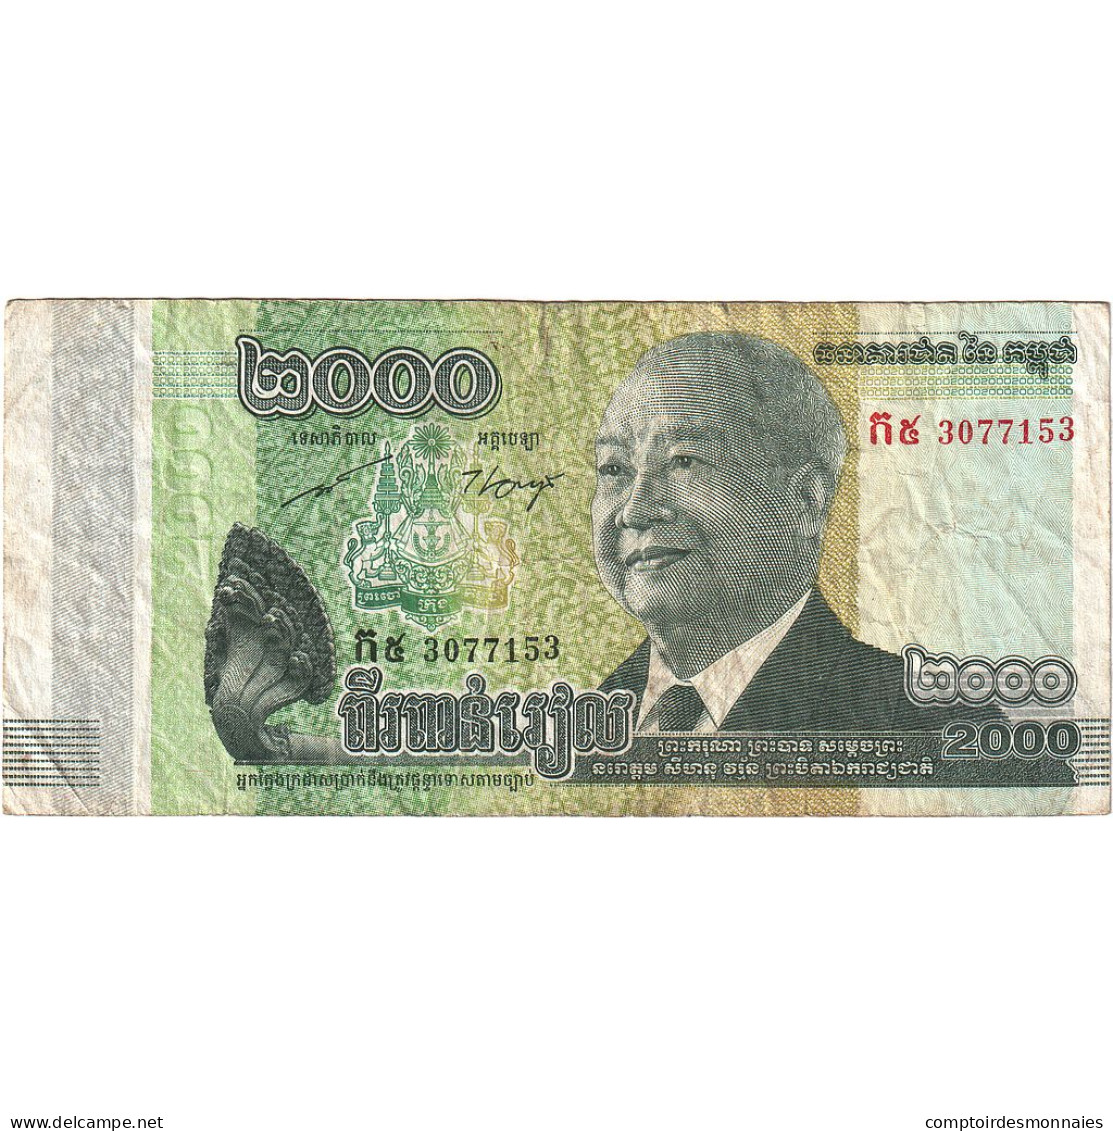 Billet, Cambodge, 2000 Riels, 2014, 2014, TTB - Kambodscha